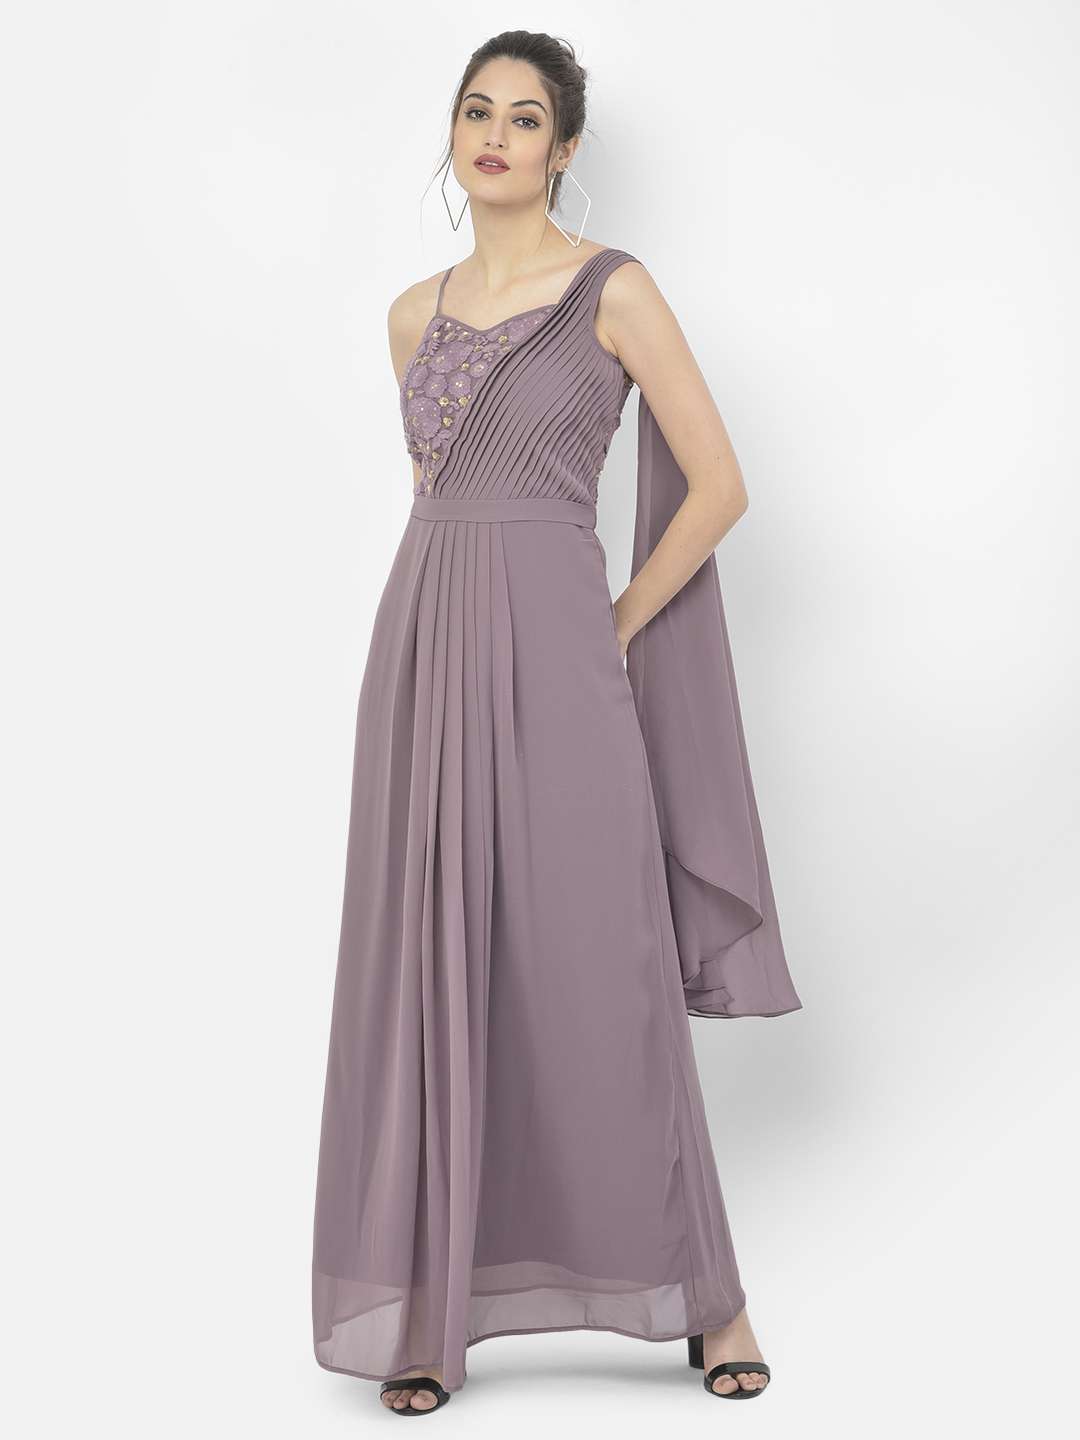 3186 Lavender Drape Saree Gown – Shama's Collection